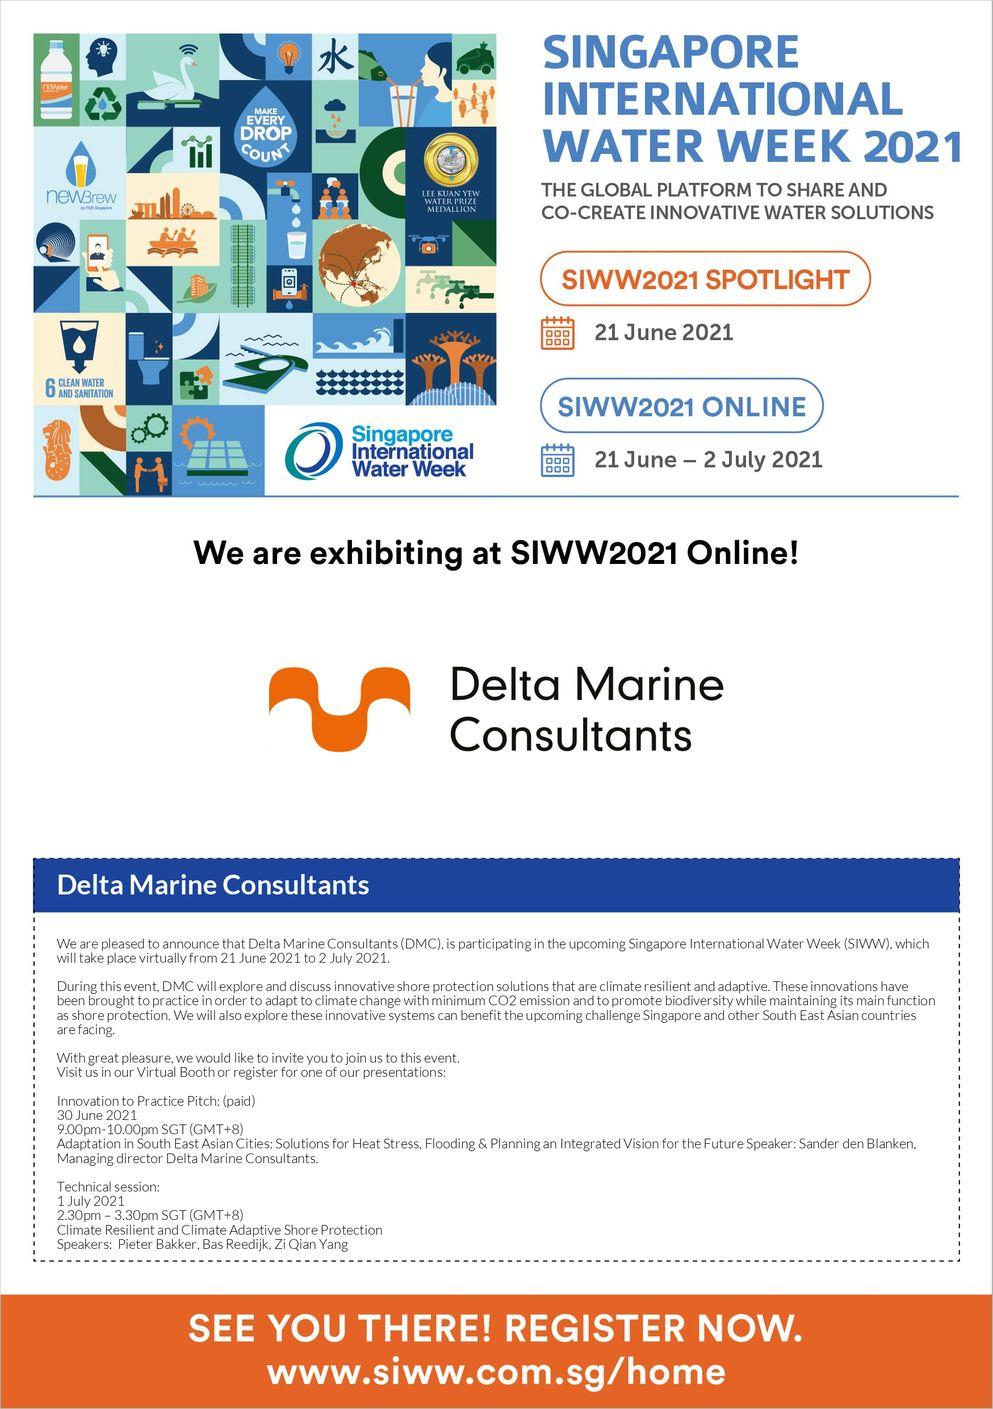 Delta Marine Consultants participating in Singapore International Water Week